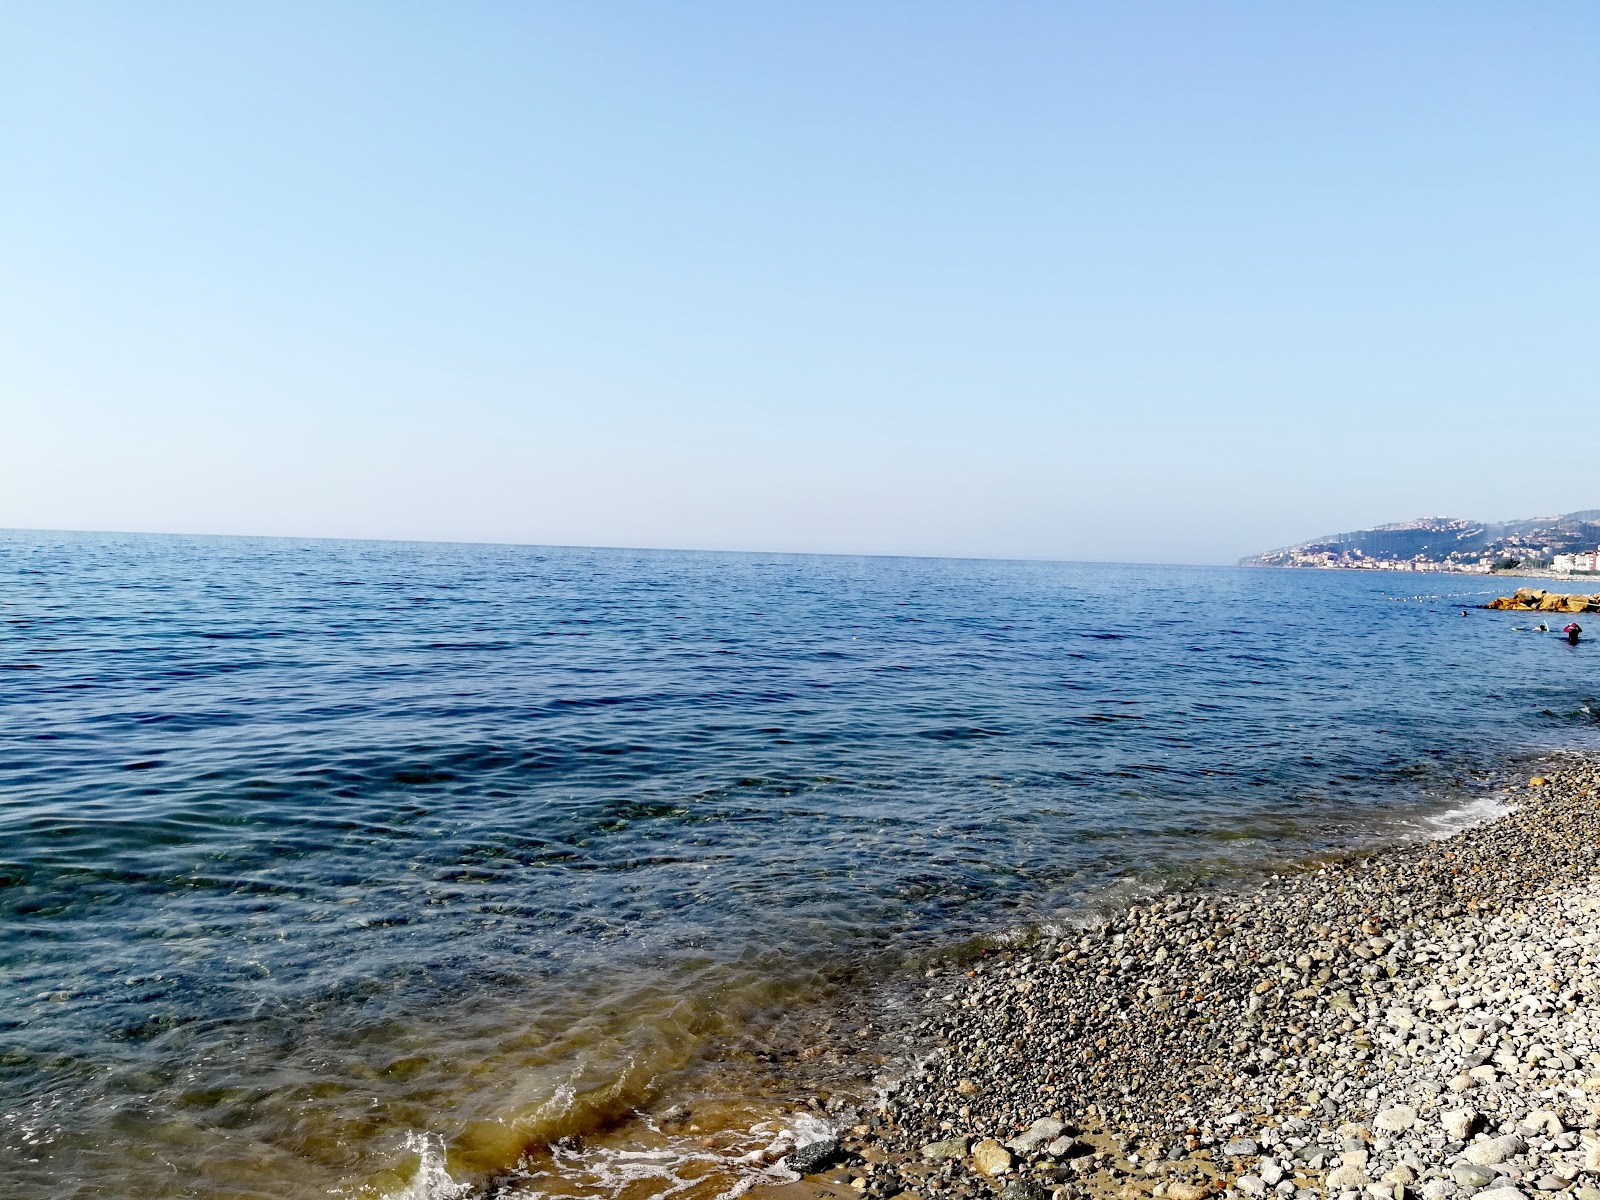 Photo of Deniz Yildizi beach - popular place among relax connoisseurs